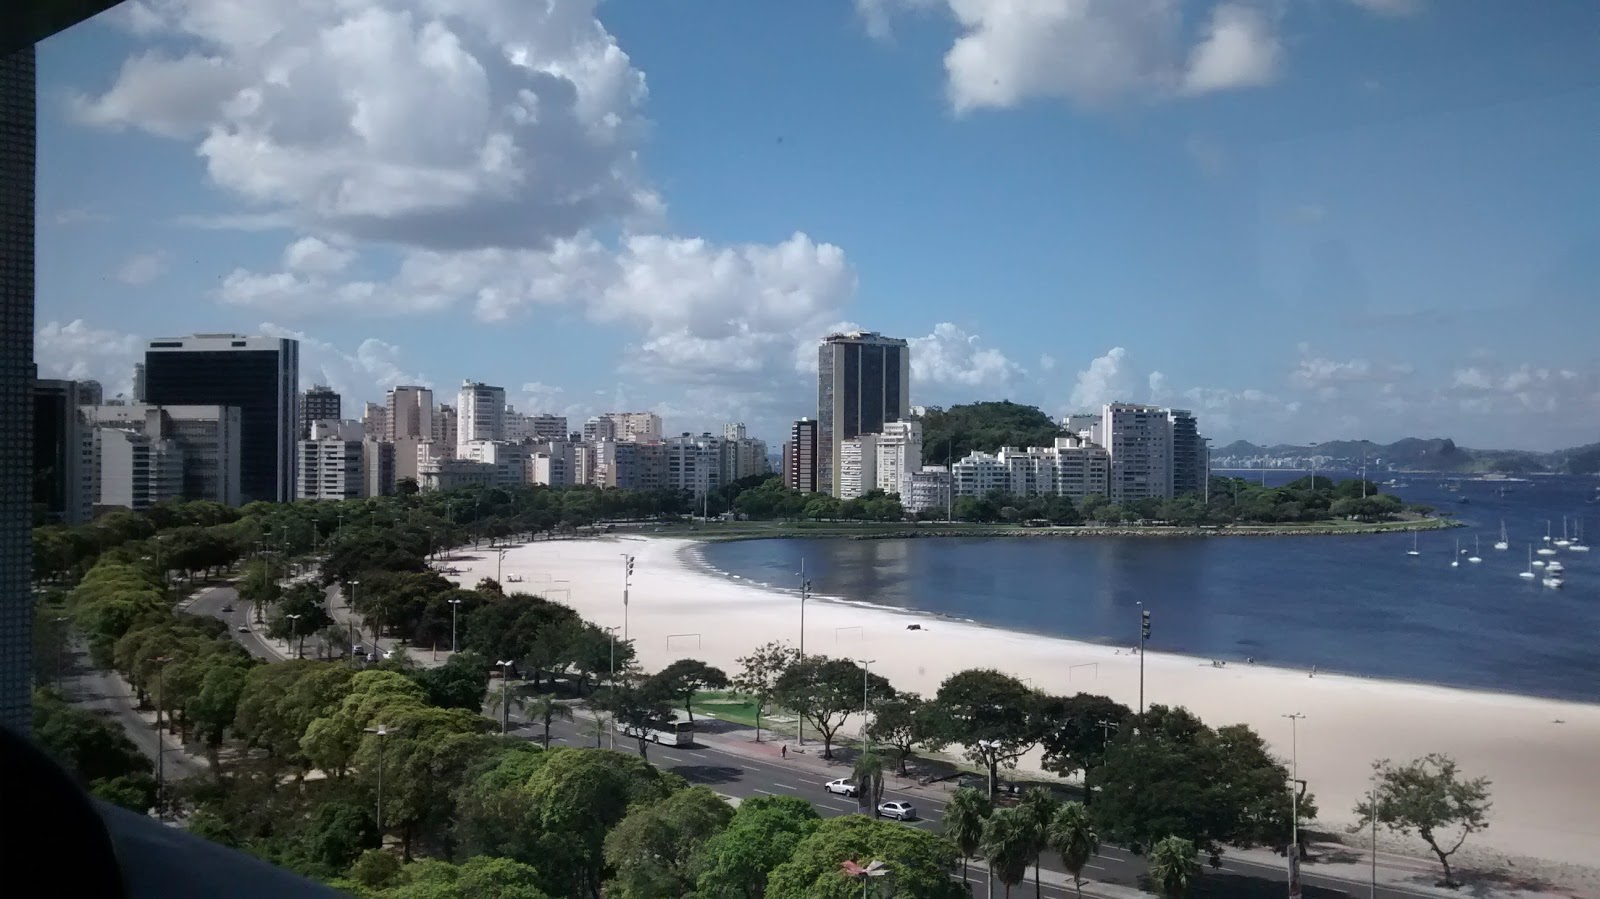 Foto av Praia de Botafogo med ljus fin sand yta